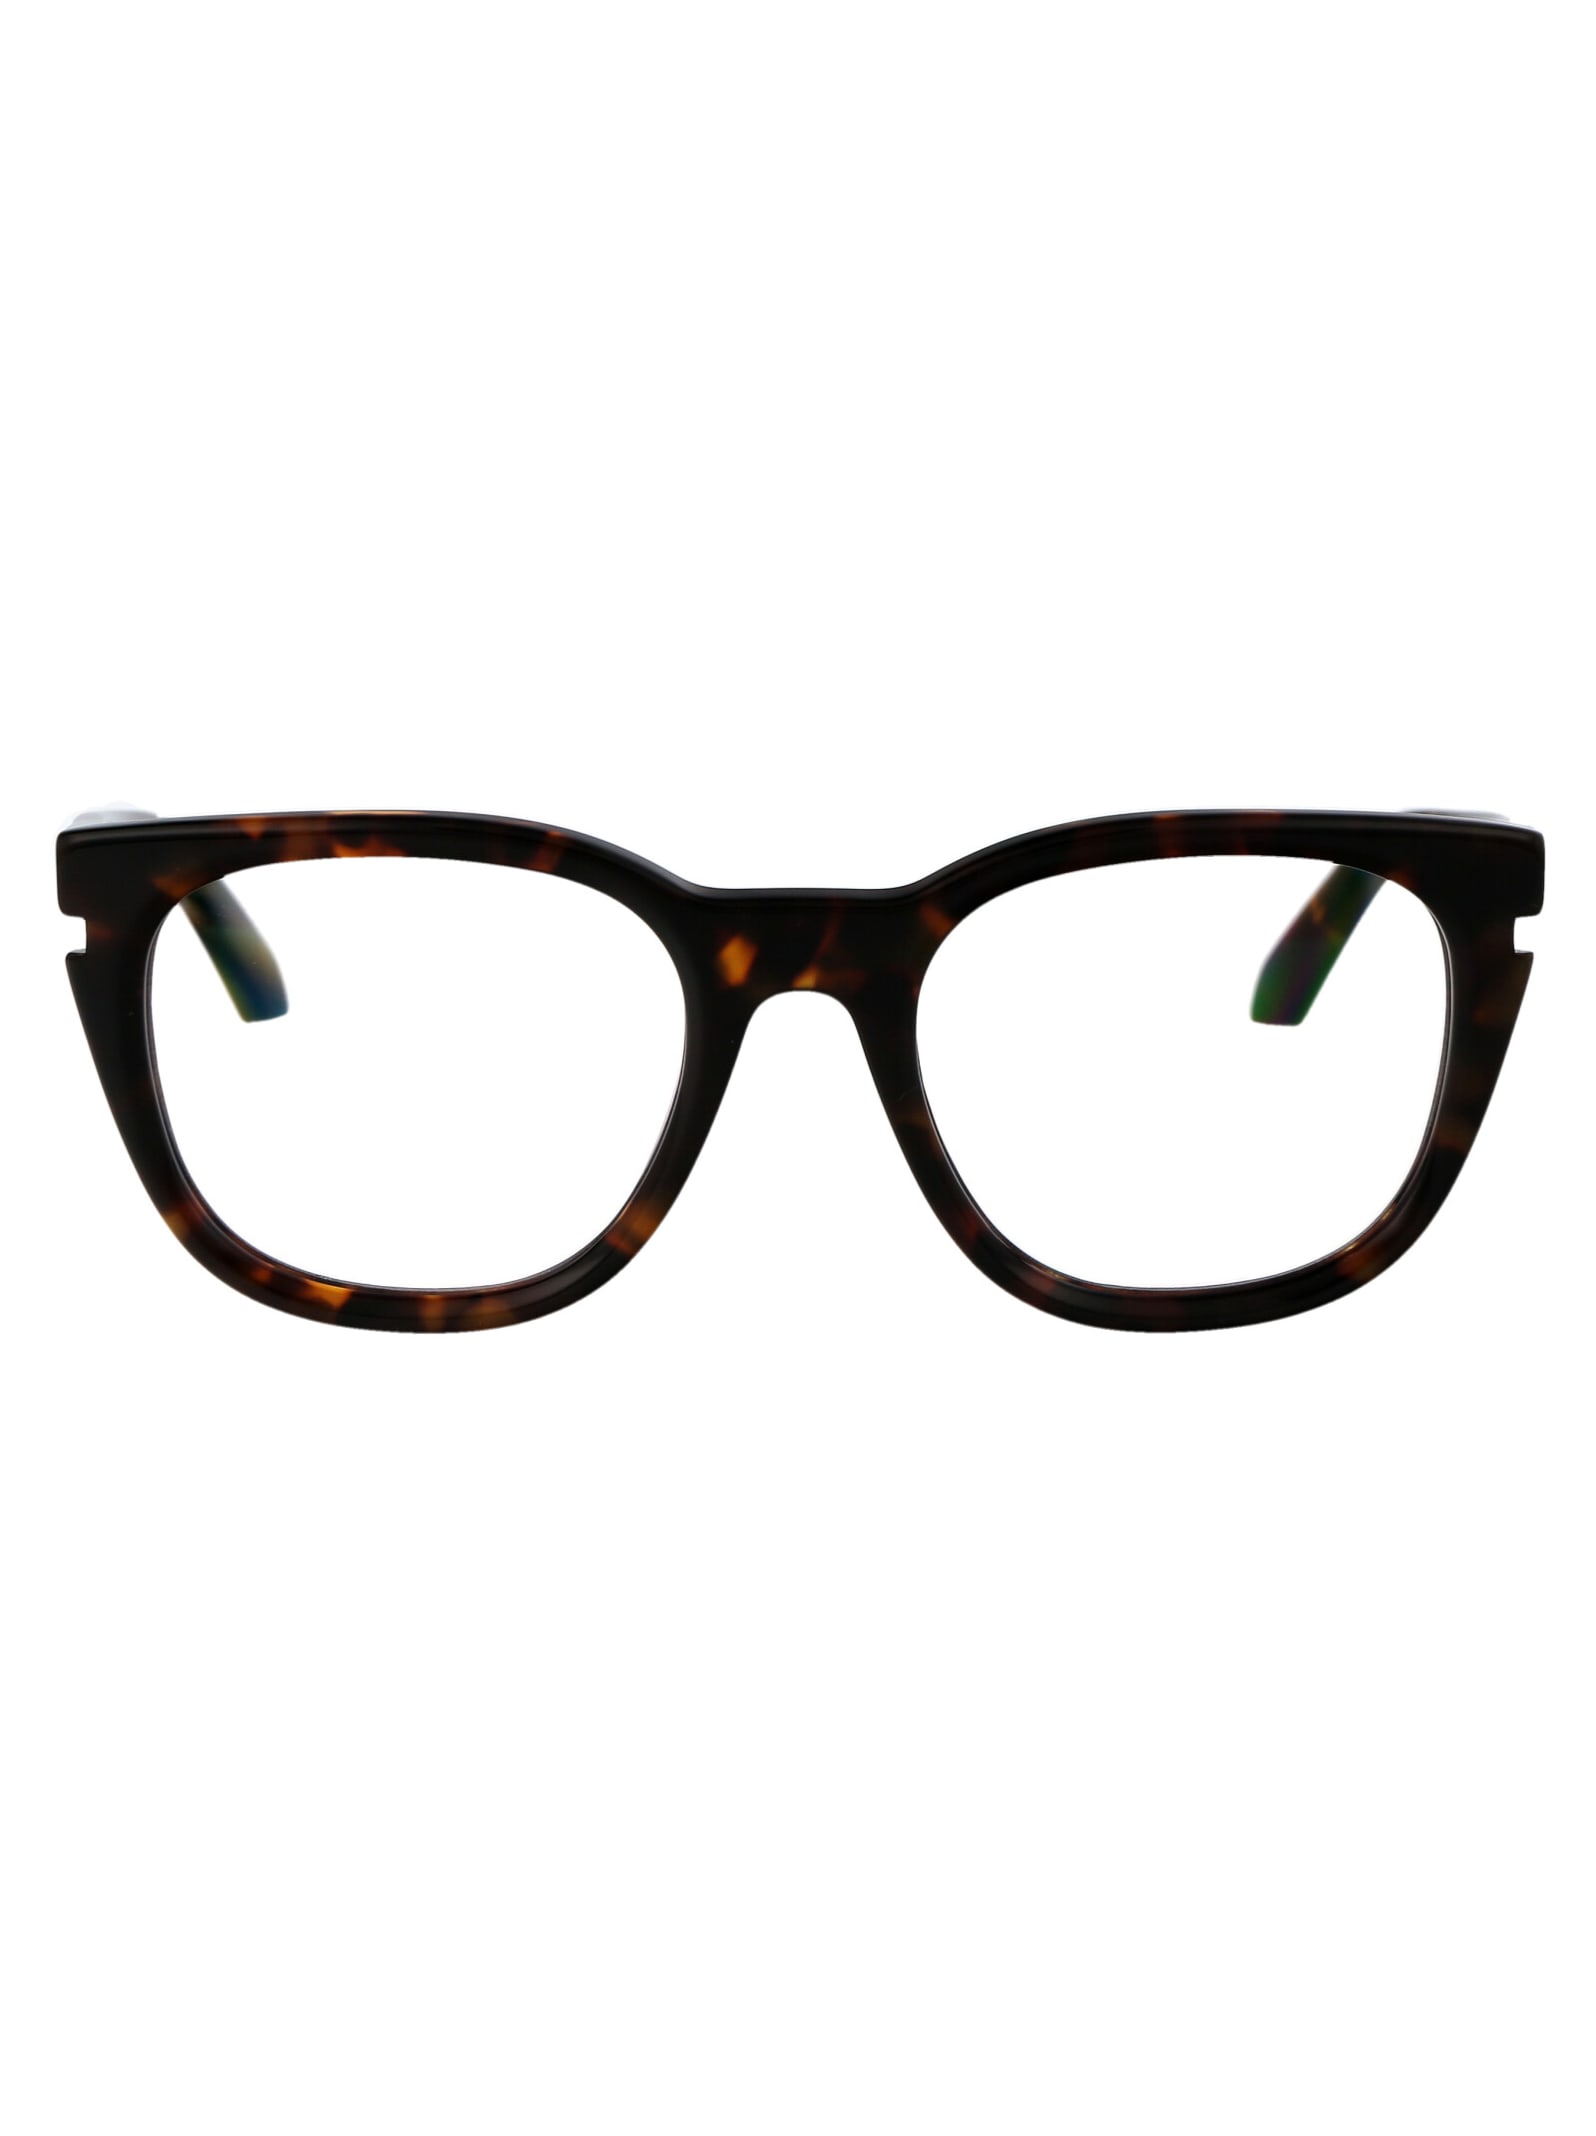 Optical Style 51 Glasses